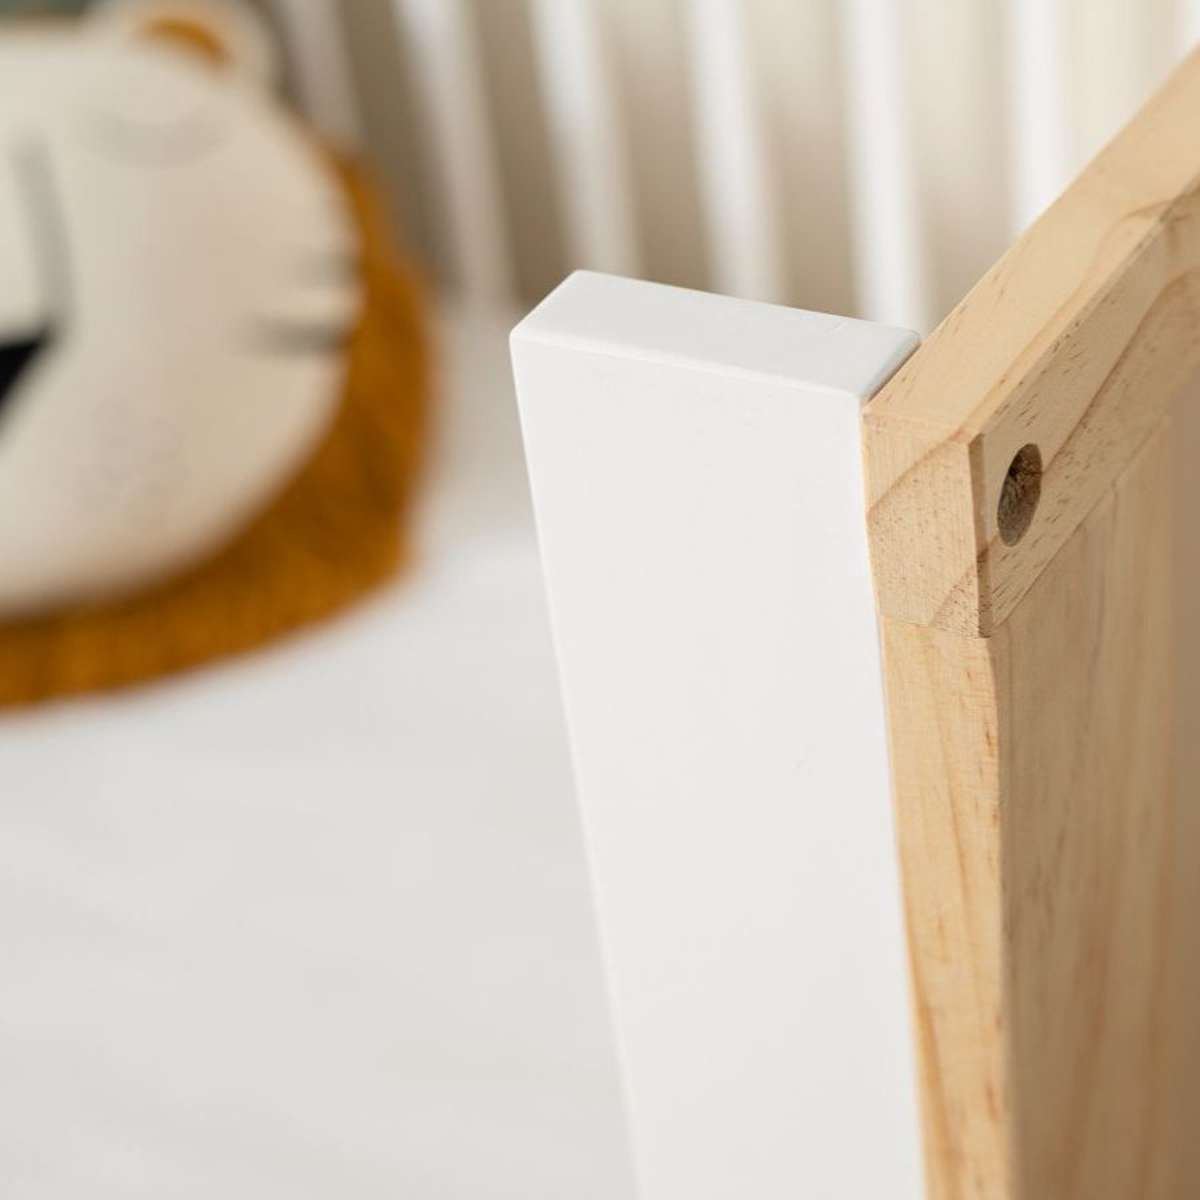 Aspiring Cot Toddler Bed Half Frame - White